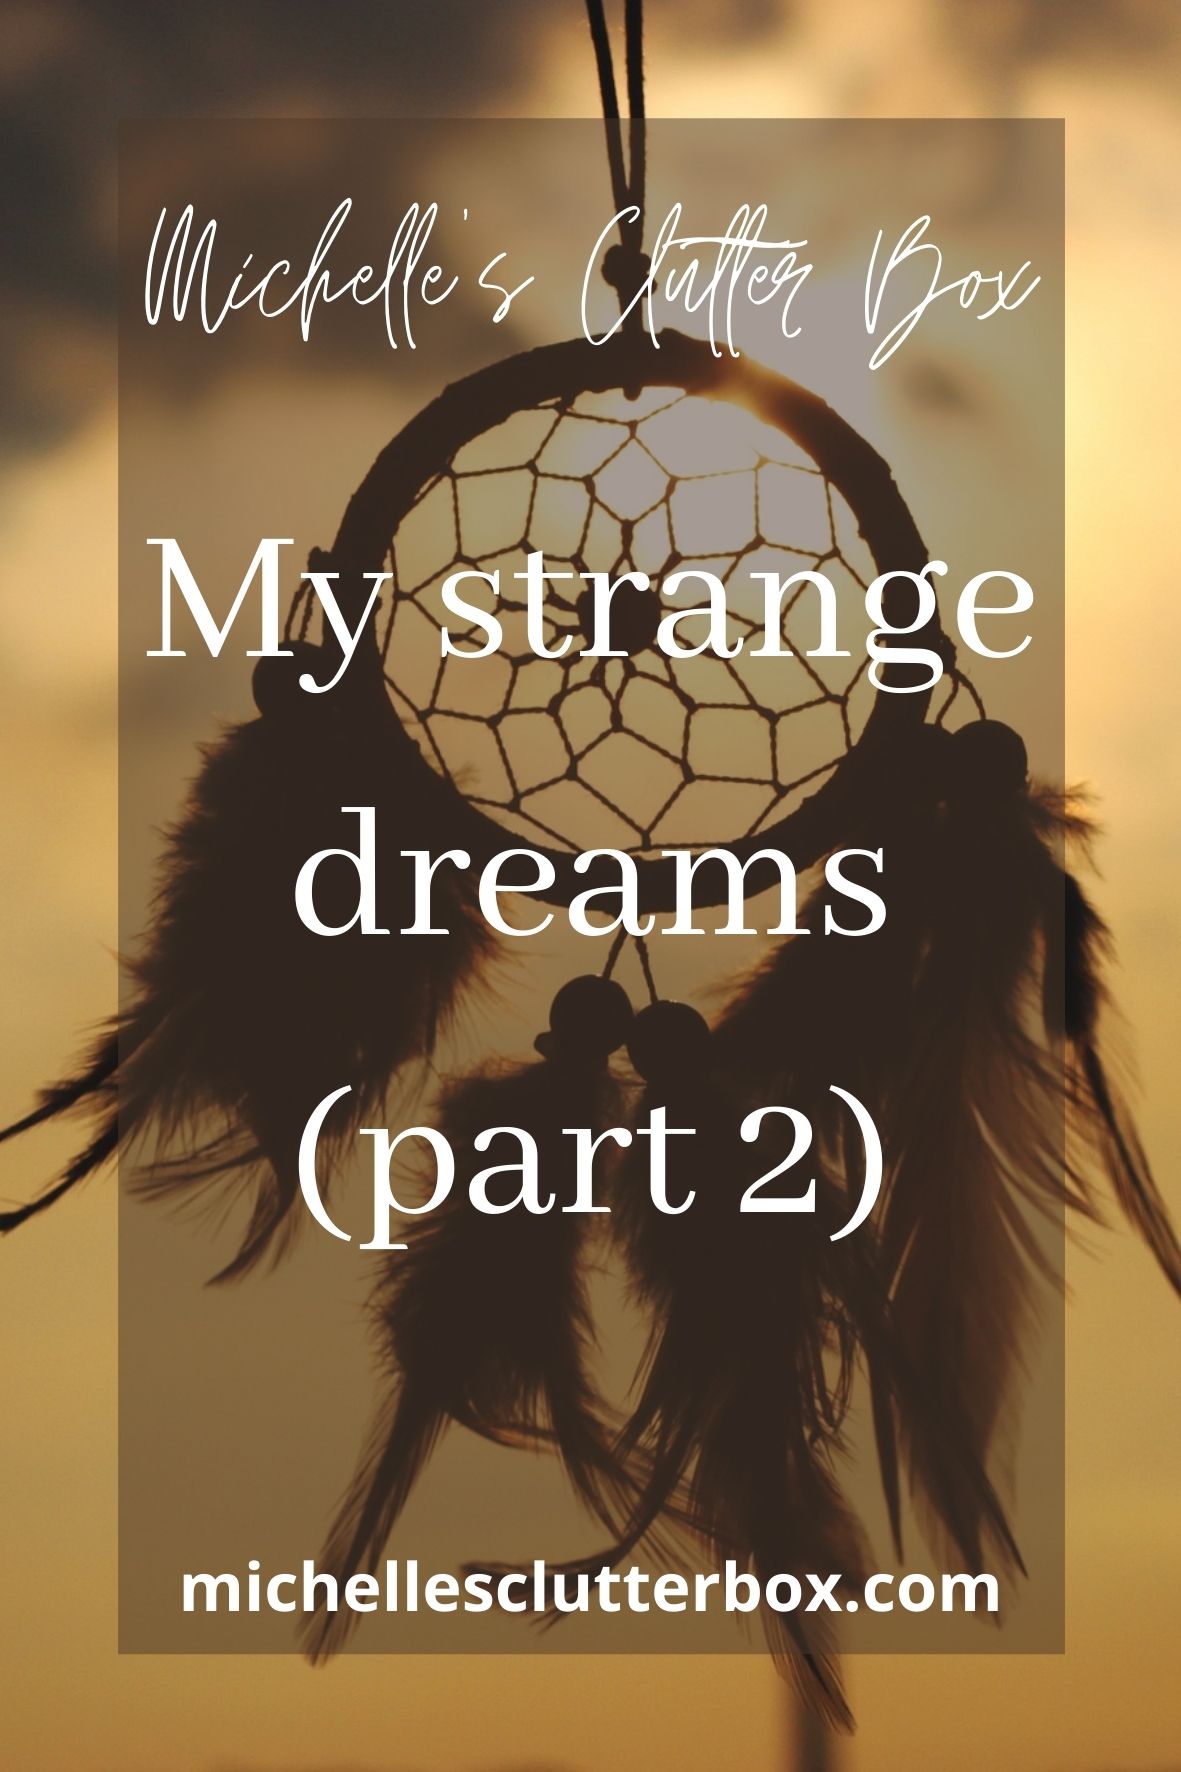 My strange dreams part 2